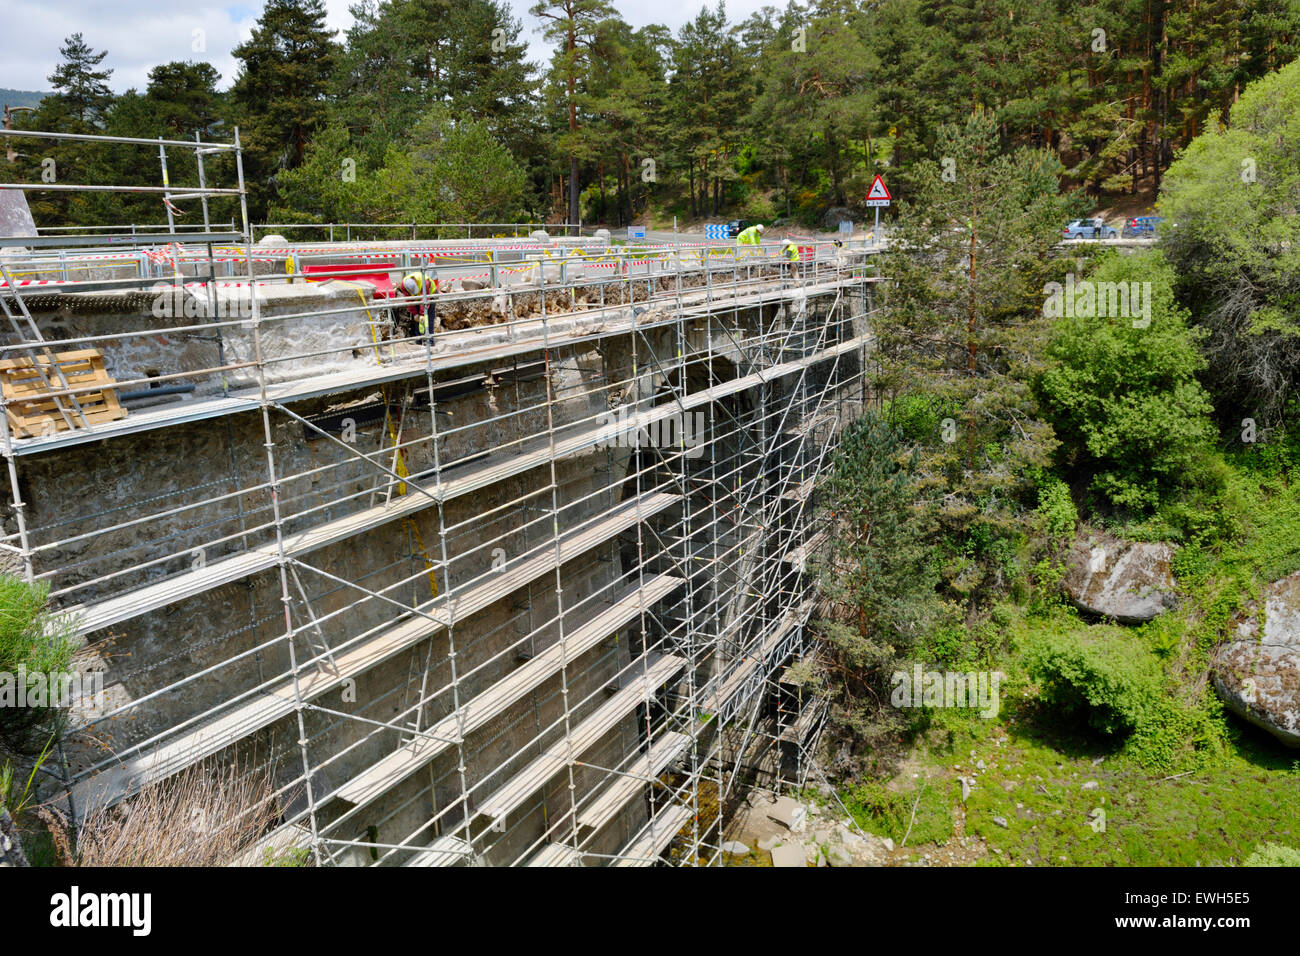 Refurbishment work on historic stone road bridge over the river Eresma on CL601 road, Spain Stock Photo